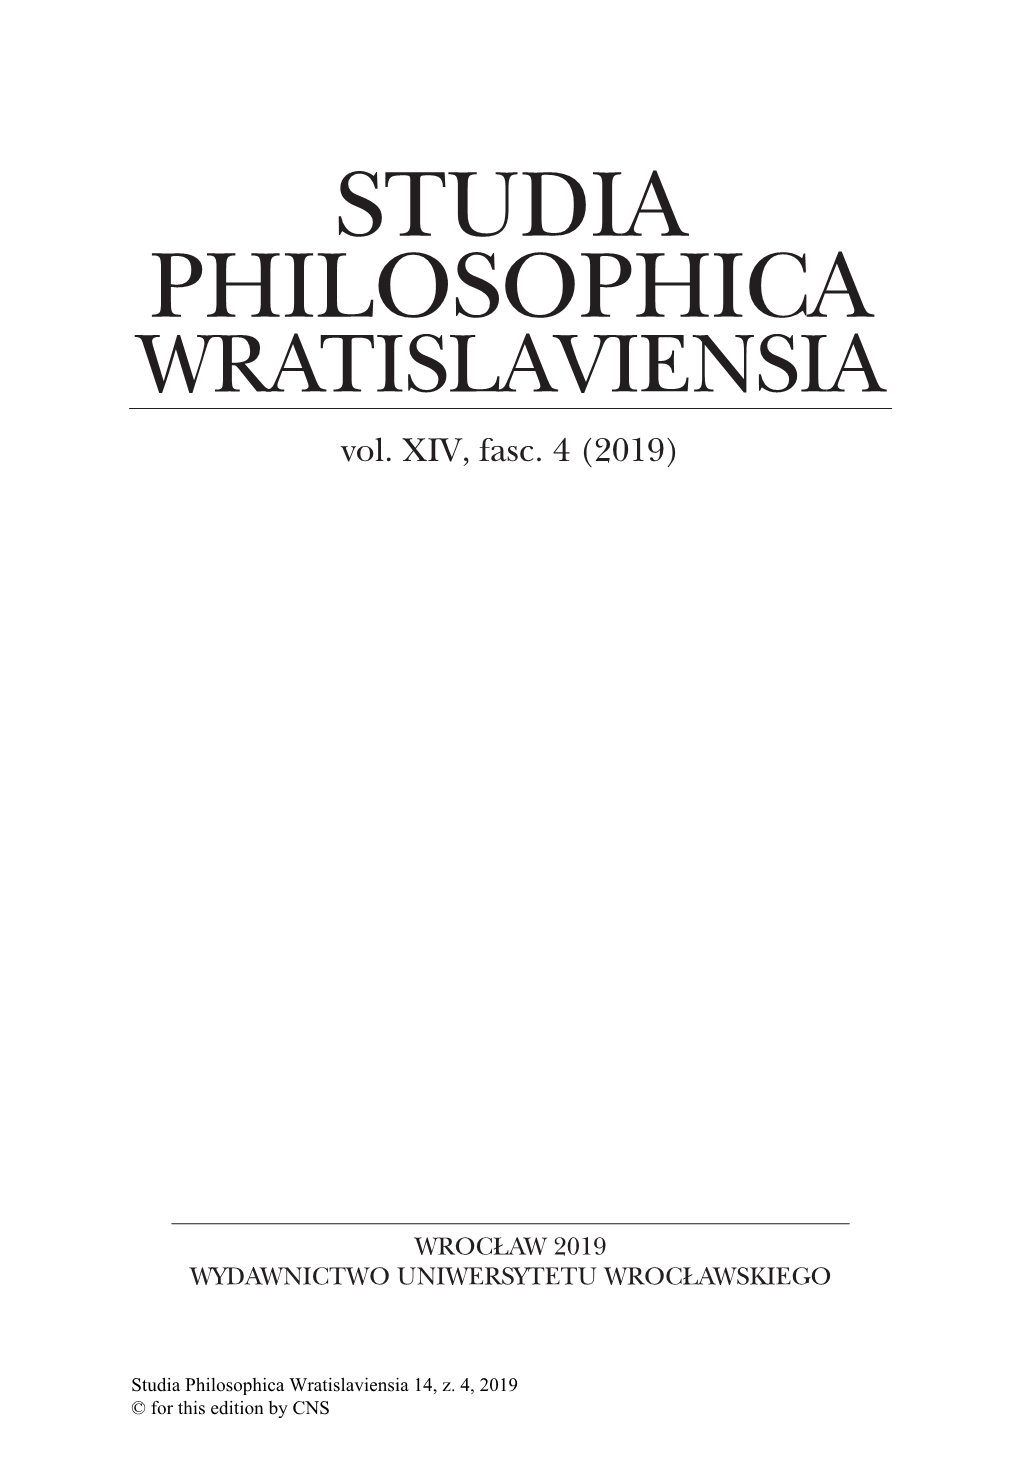 STUDIA PHILOSOPHICA WRATISLAVIENSIA Vol